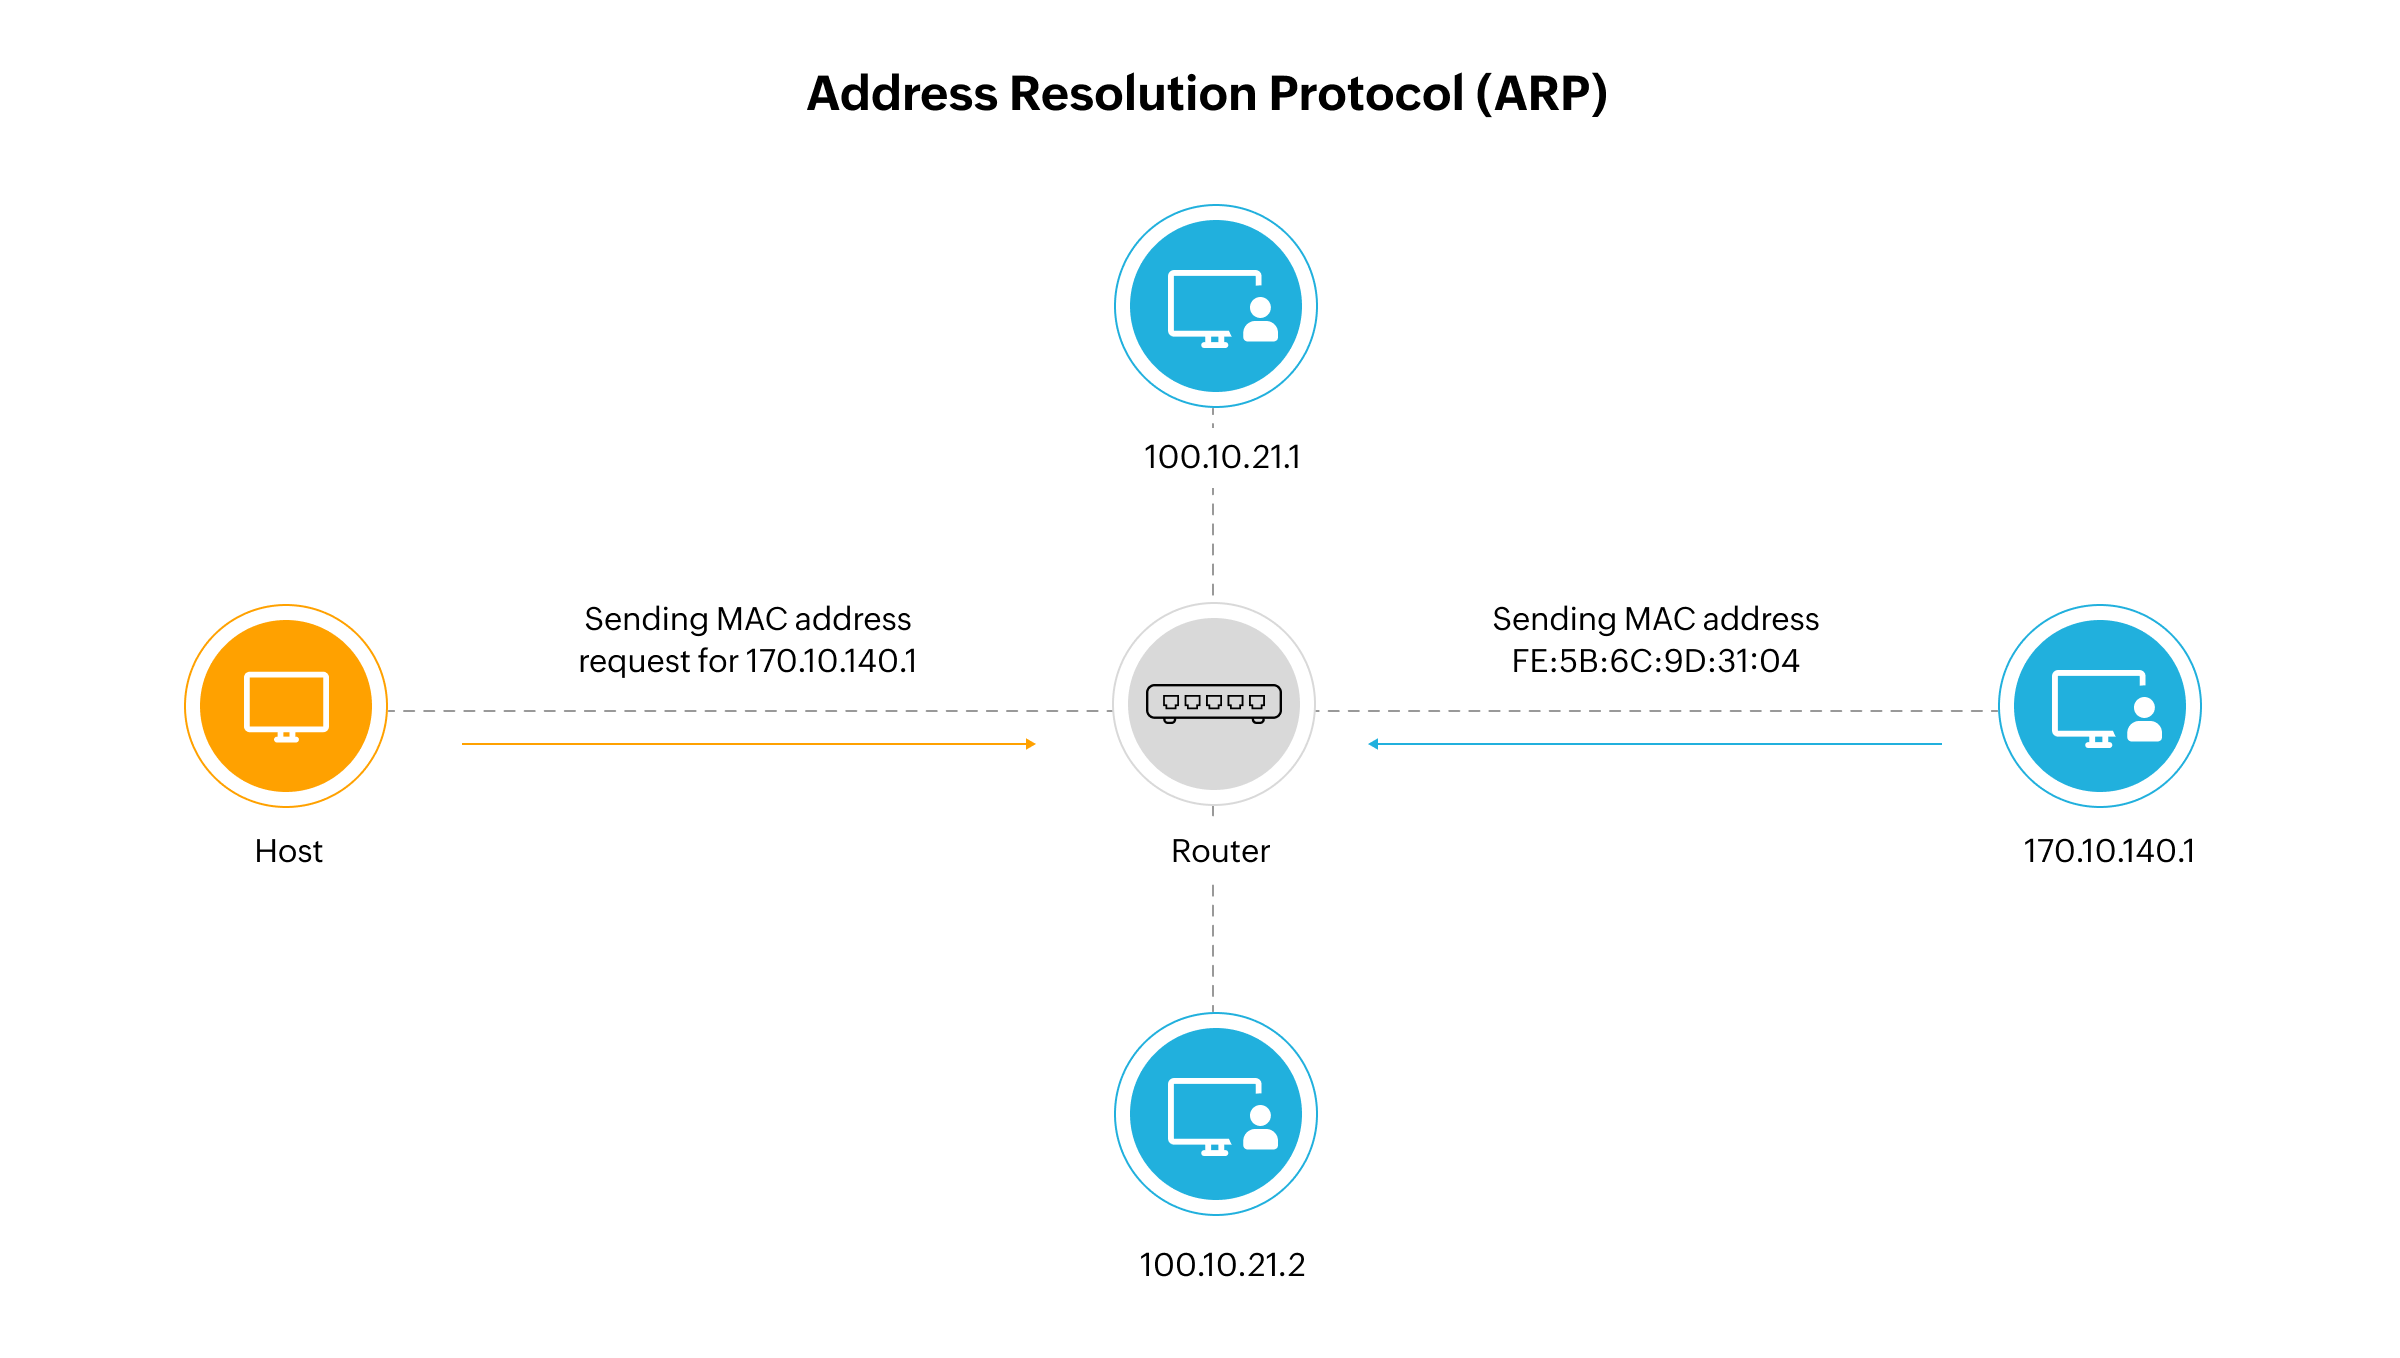 How Address Resolution Protocol works?